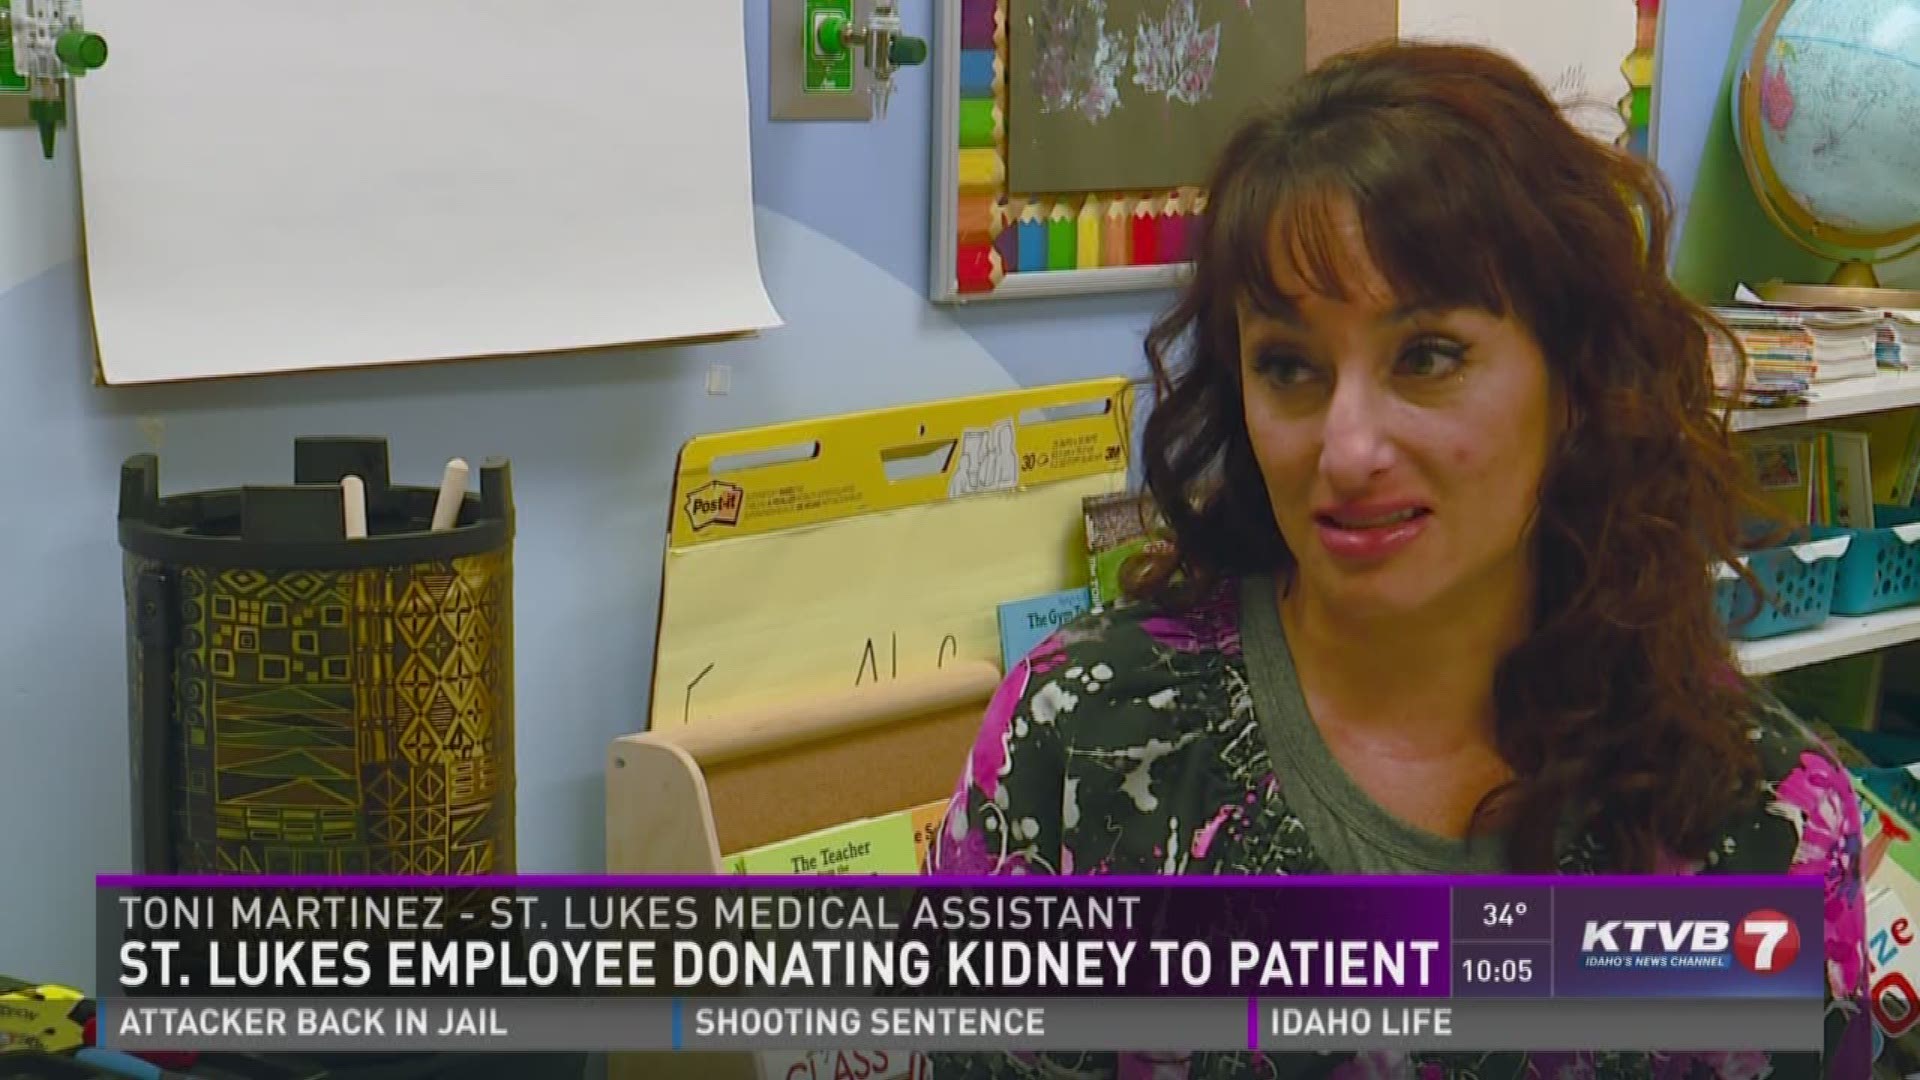 St. Luke's employee donating kidney to patient.